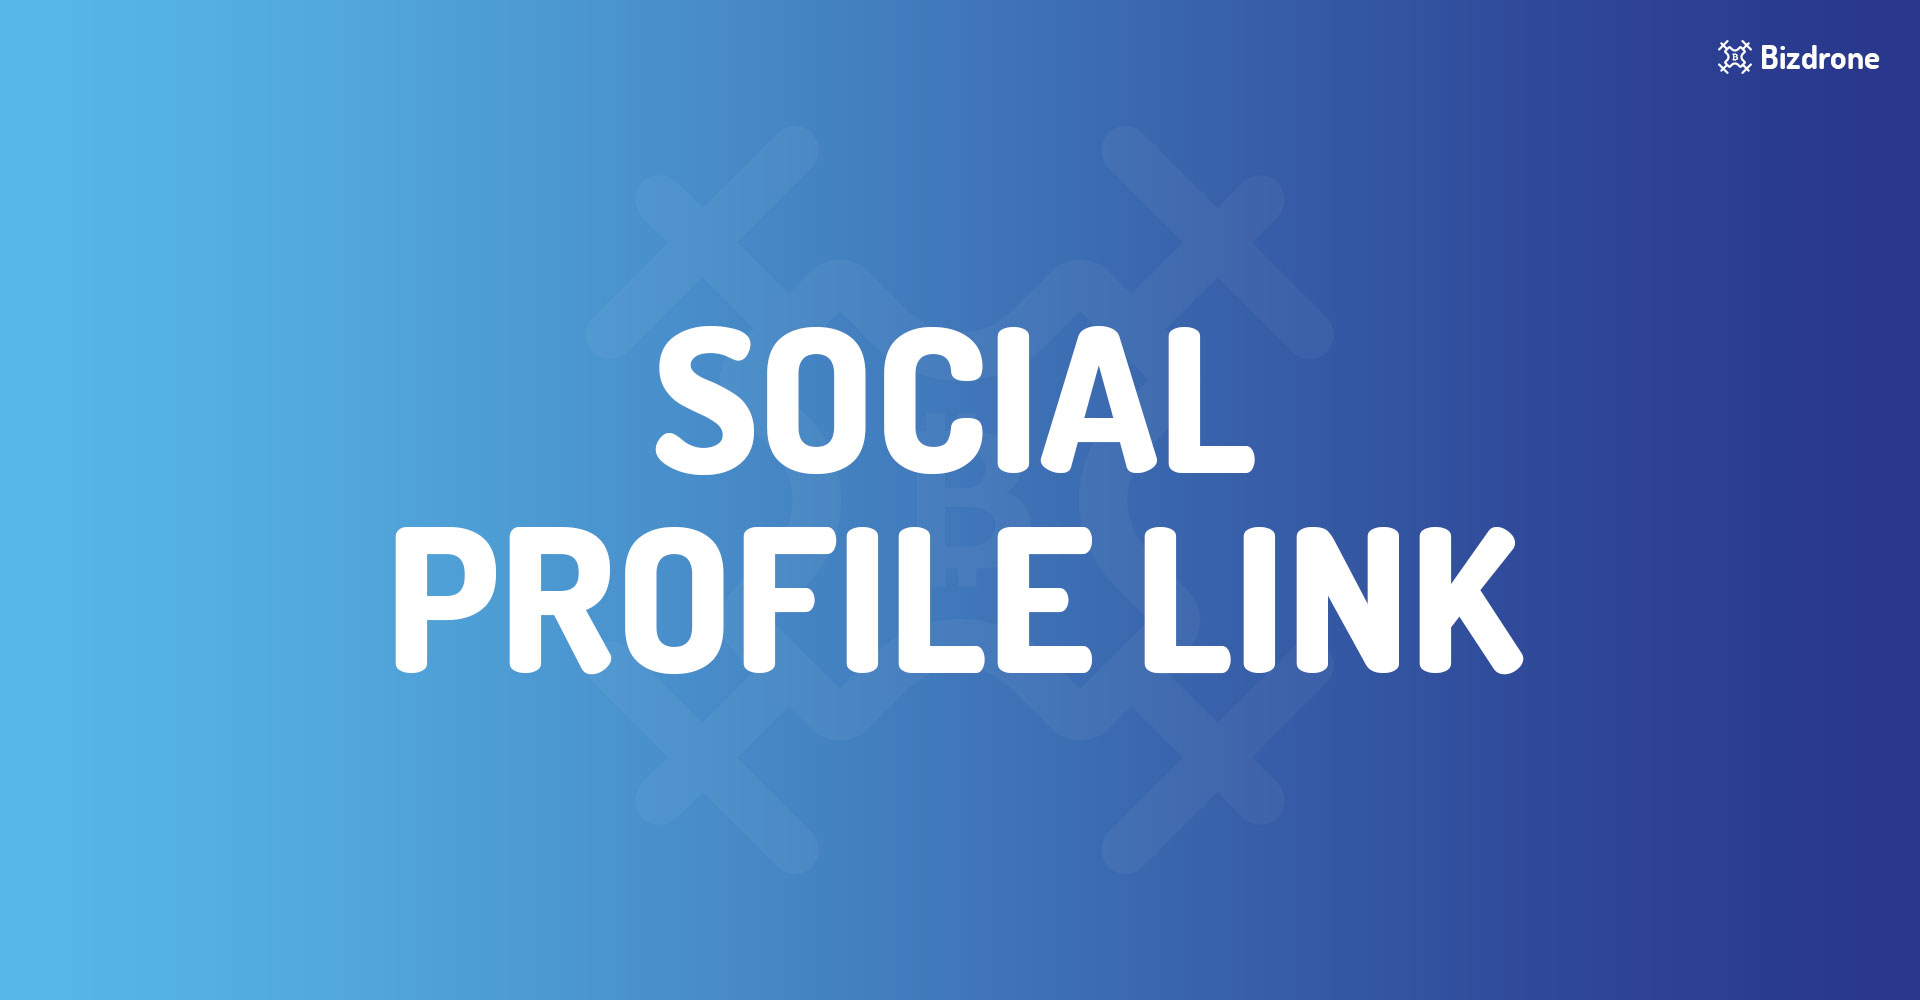 Social profile link